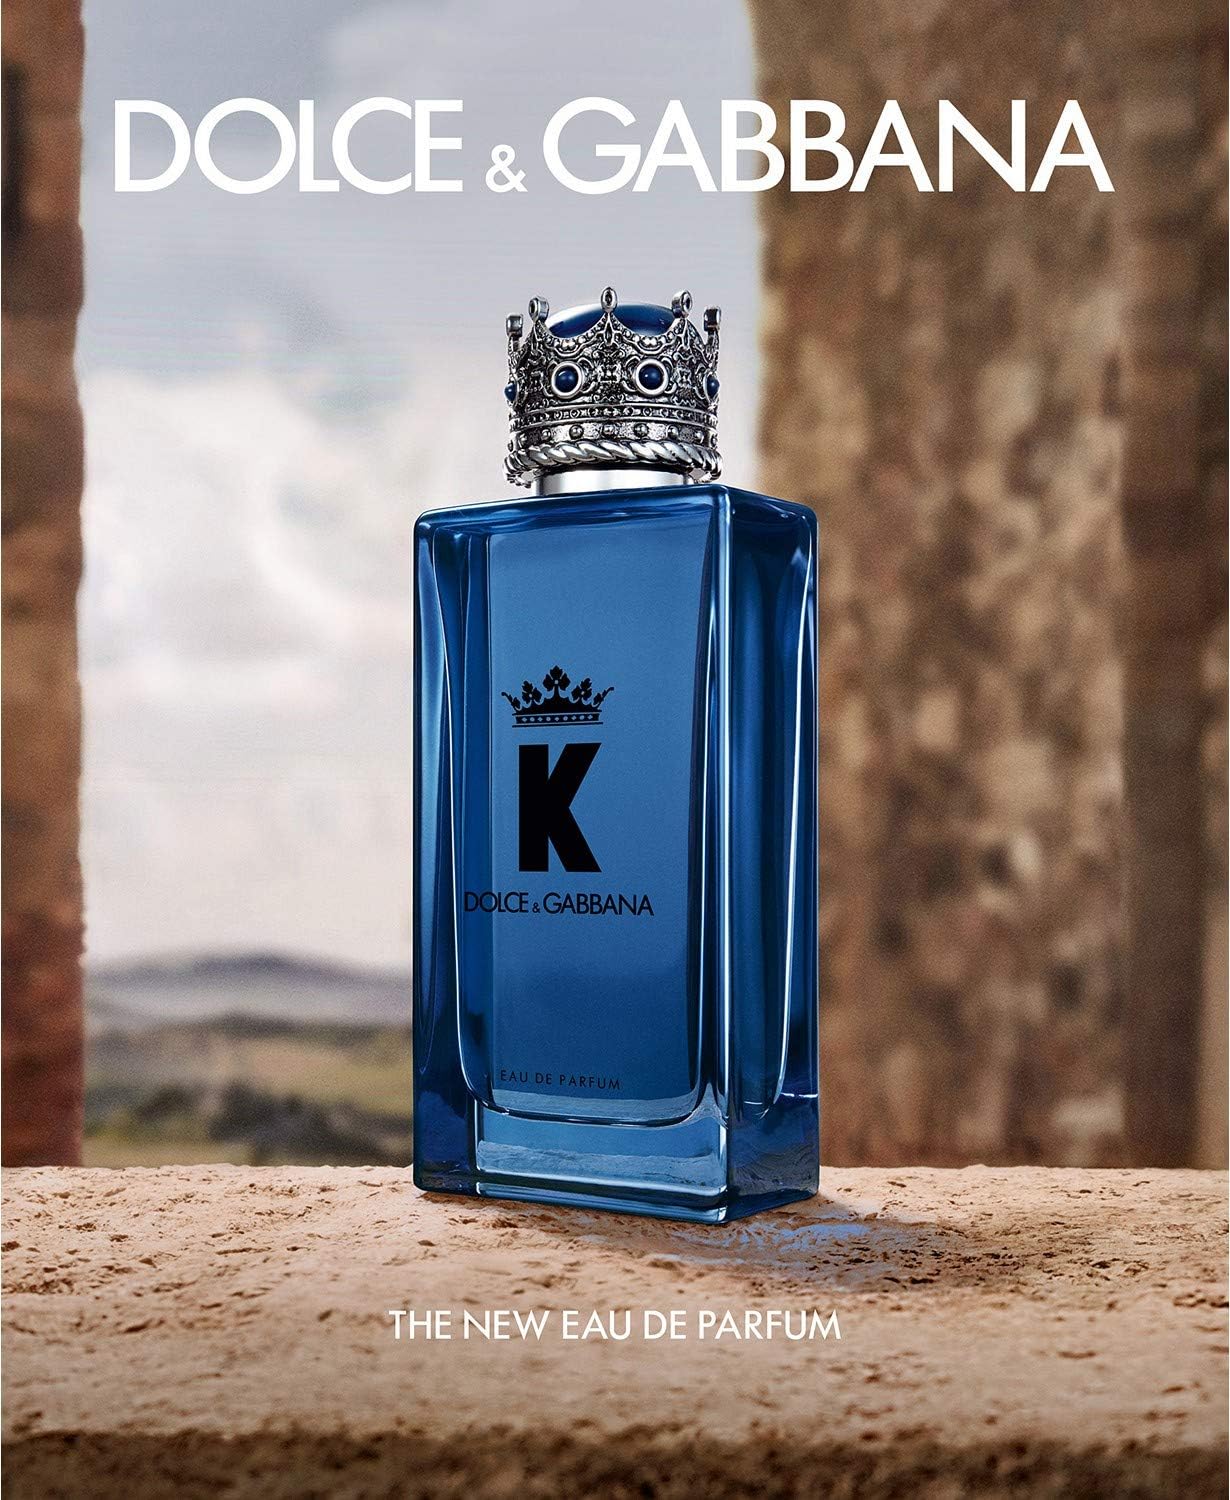 ادکلن مردانه دولچه گابانا مدل Dolce  Gabbana K for Men 100 ml - ارسال 10 الی 15 روز کاری